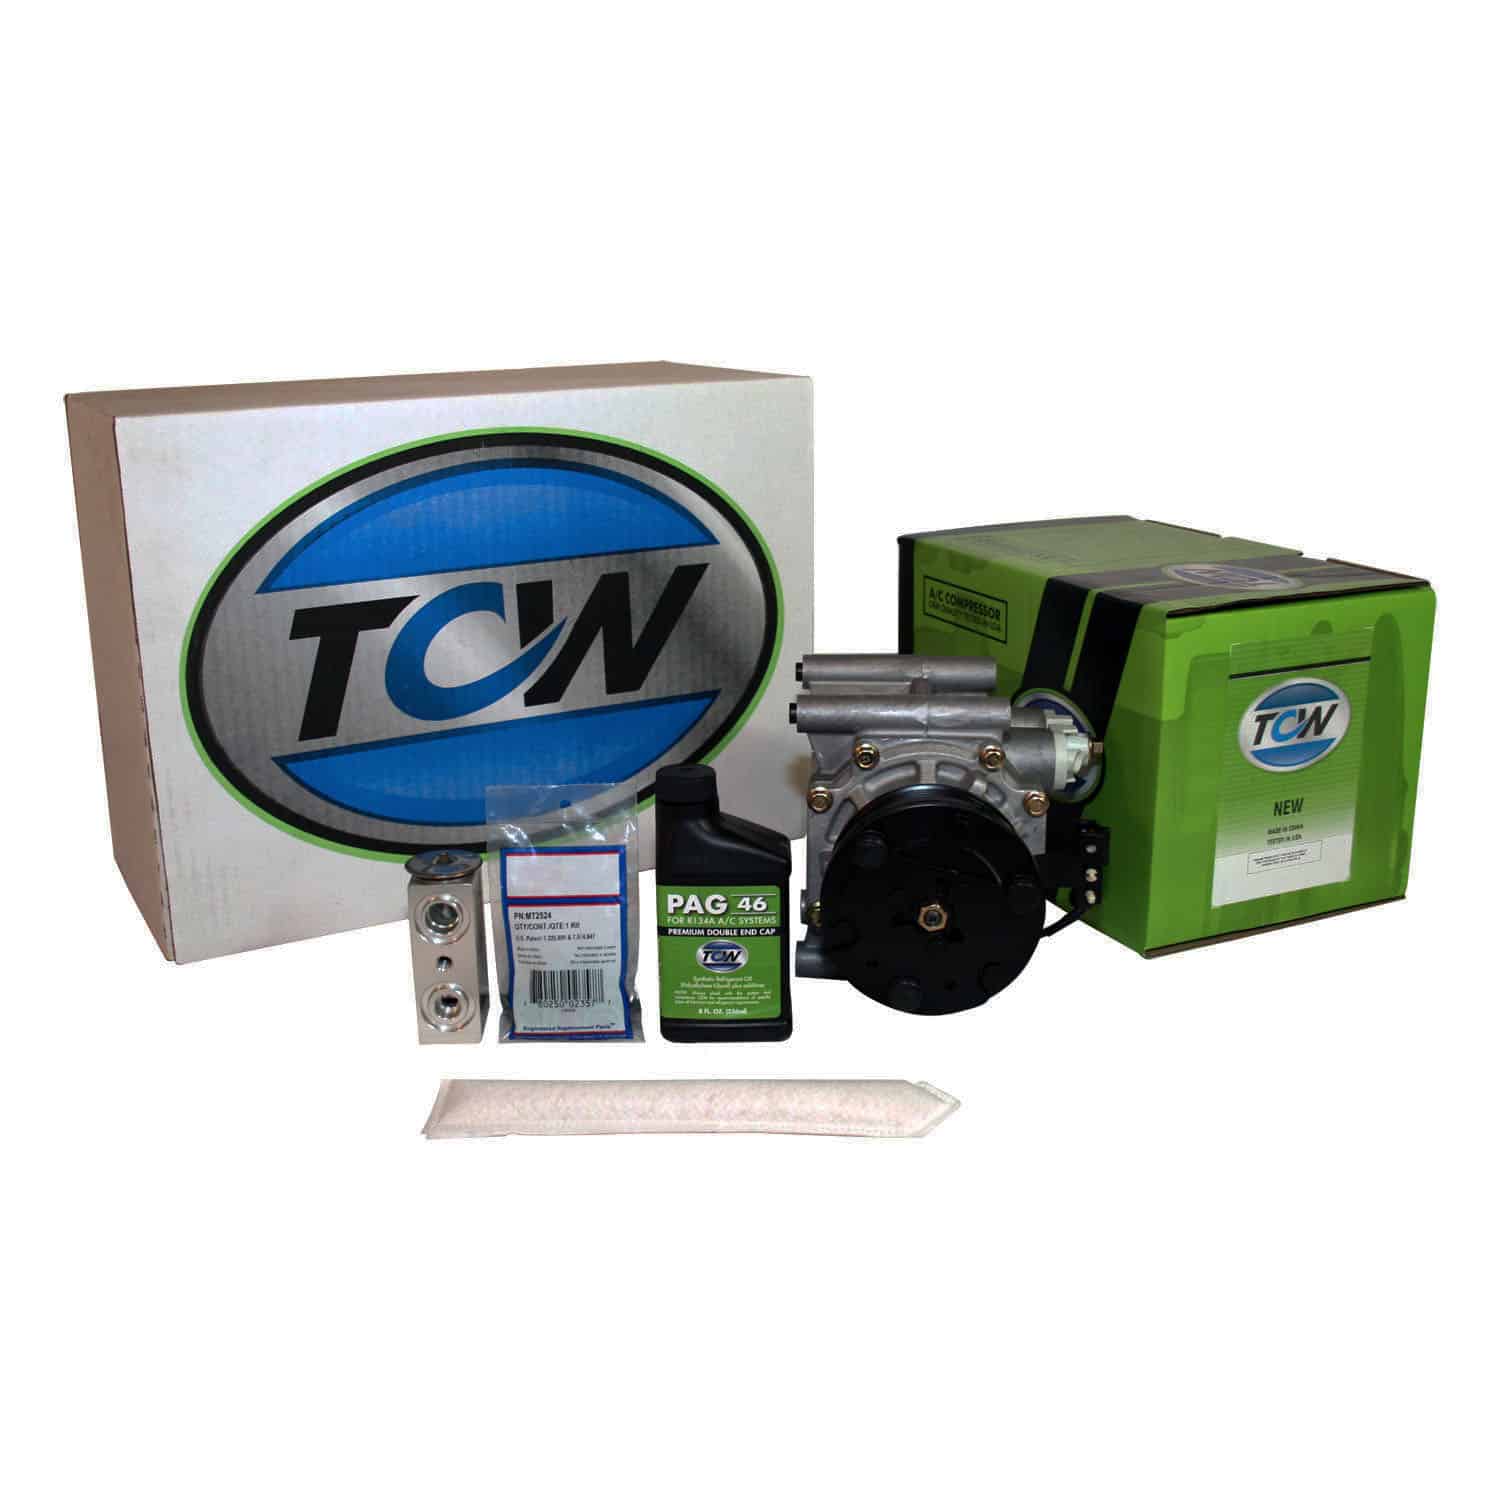 TCW Vehicle A/C Kit K1000249N New Product Image field_60b6a13a6e67c